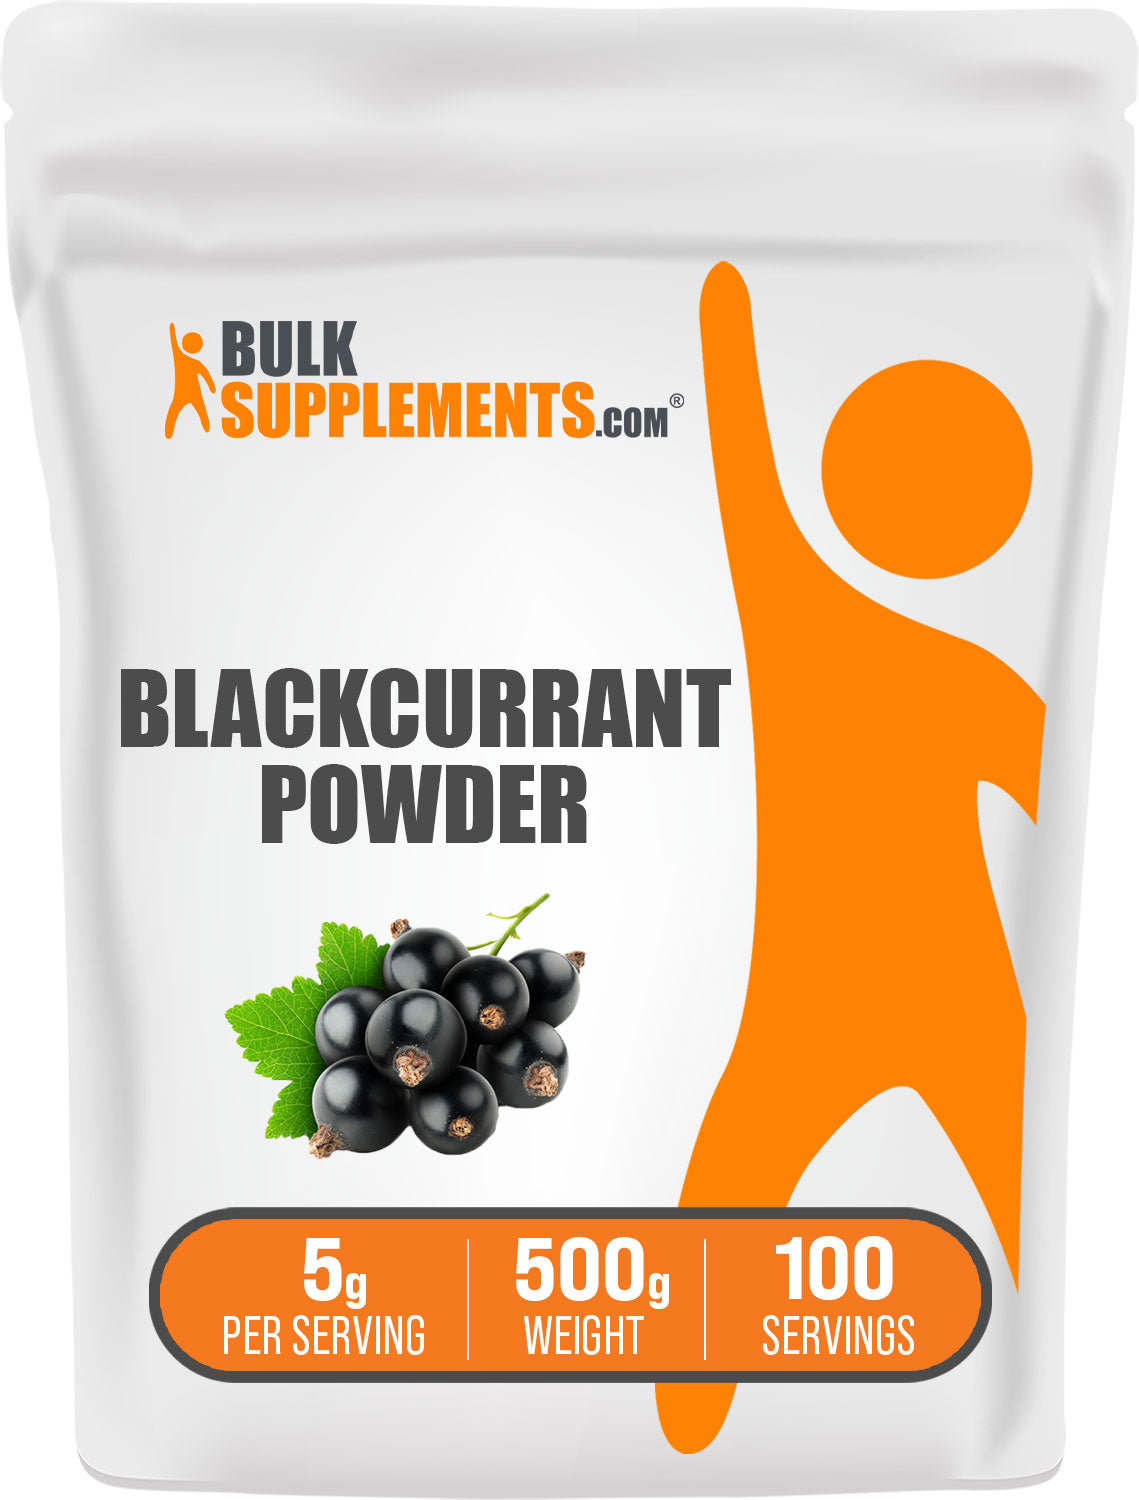 500g of Blackcurrant Powder